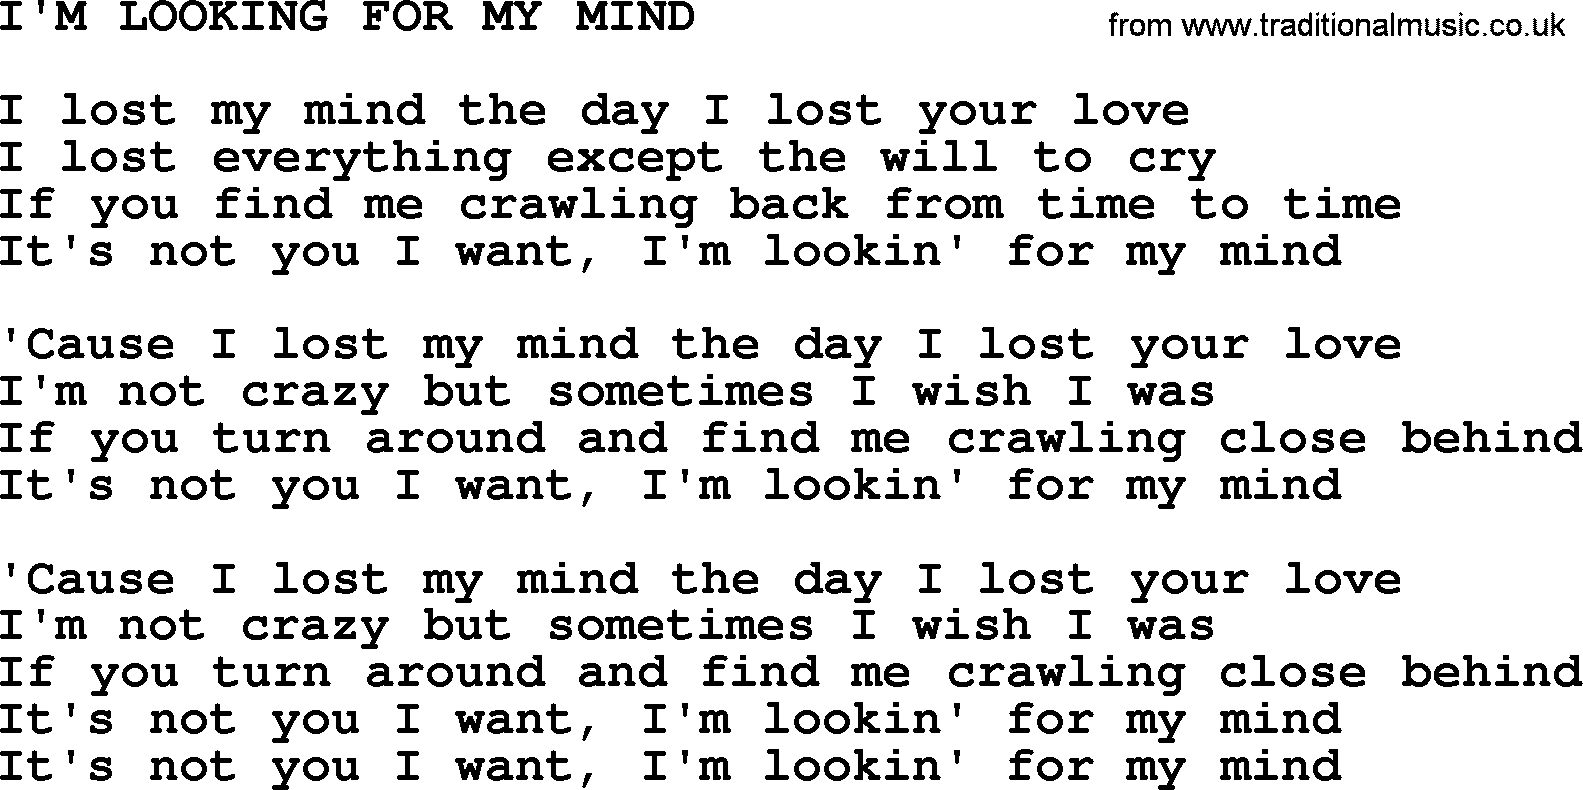 Merle Haggard song: I'm Looking For My Mind, lyrics.